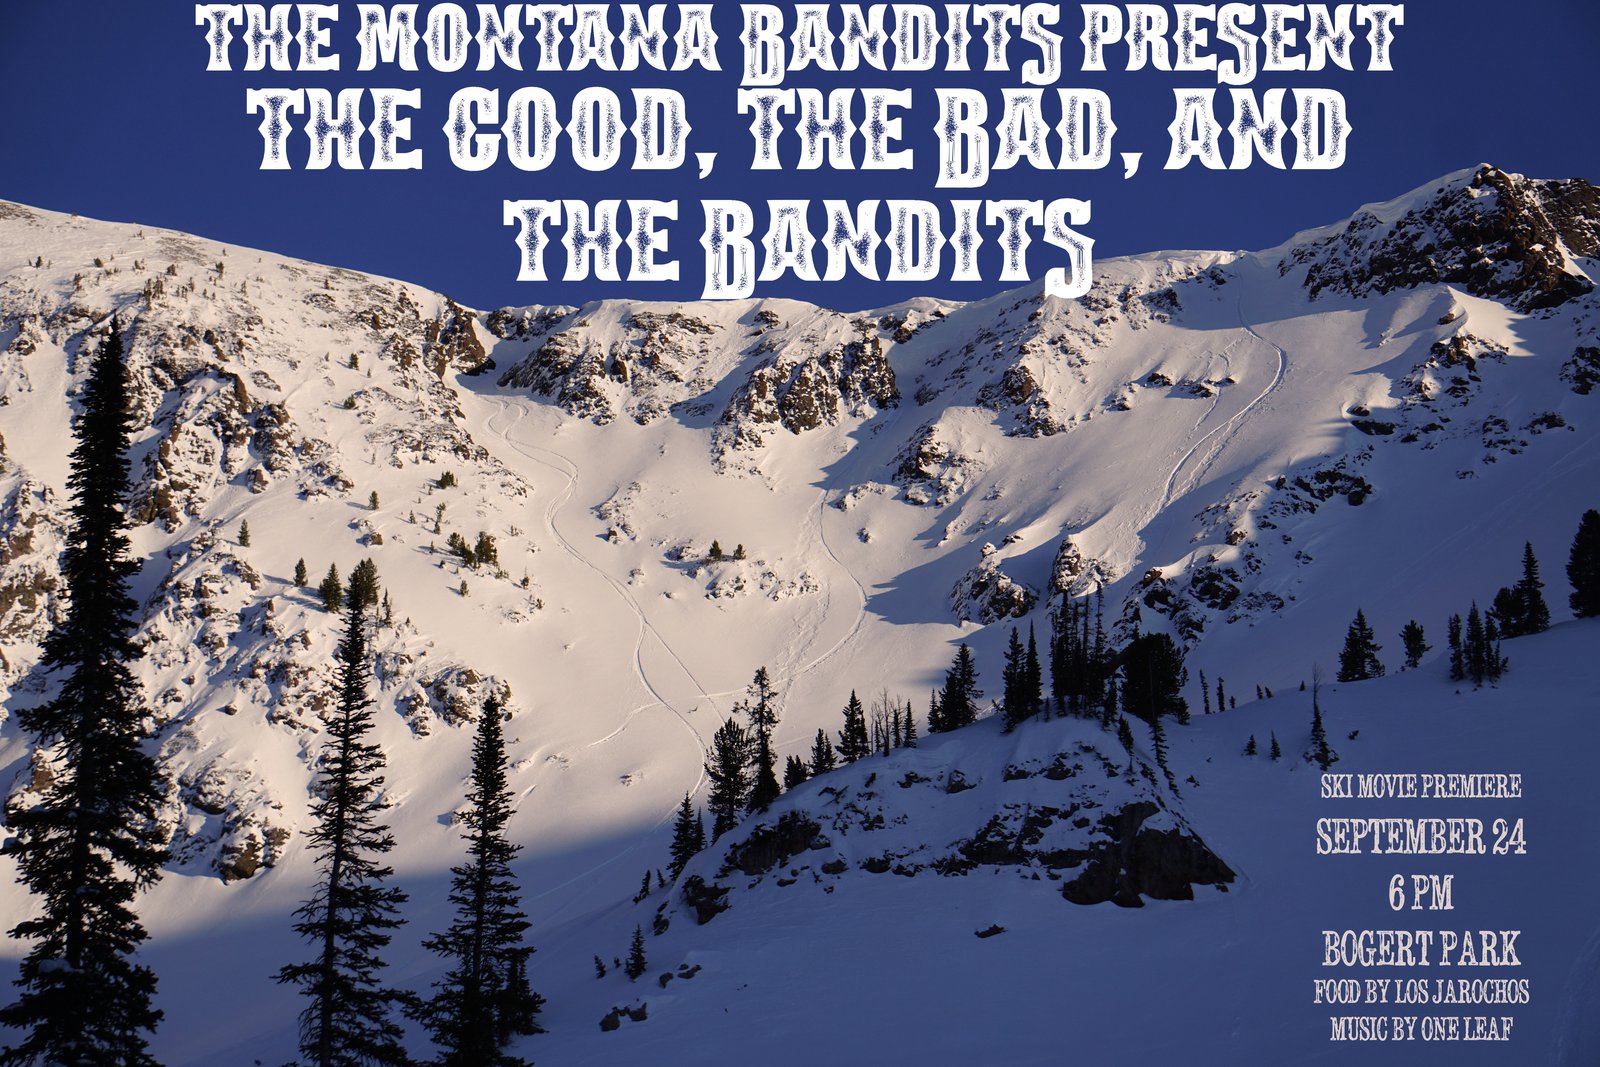 The Montana Bandits Movie Premiere